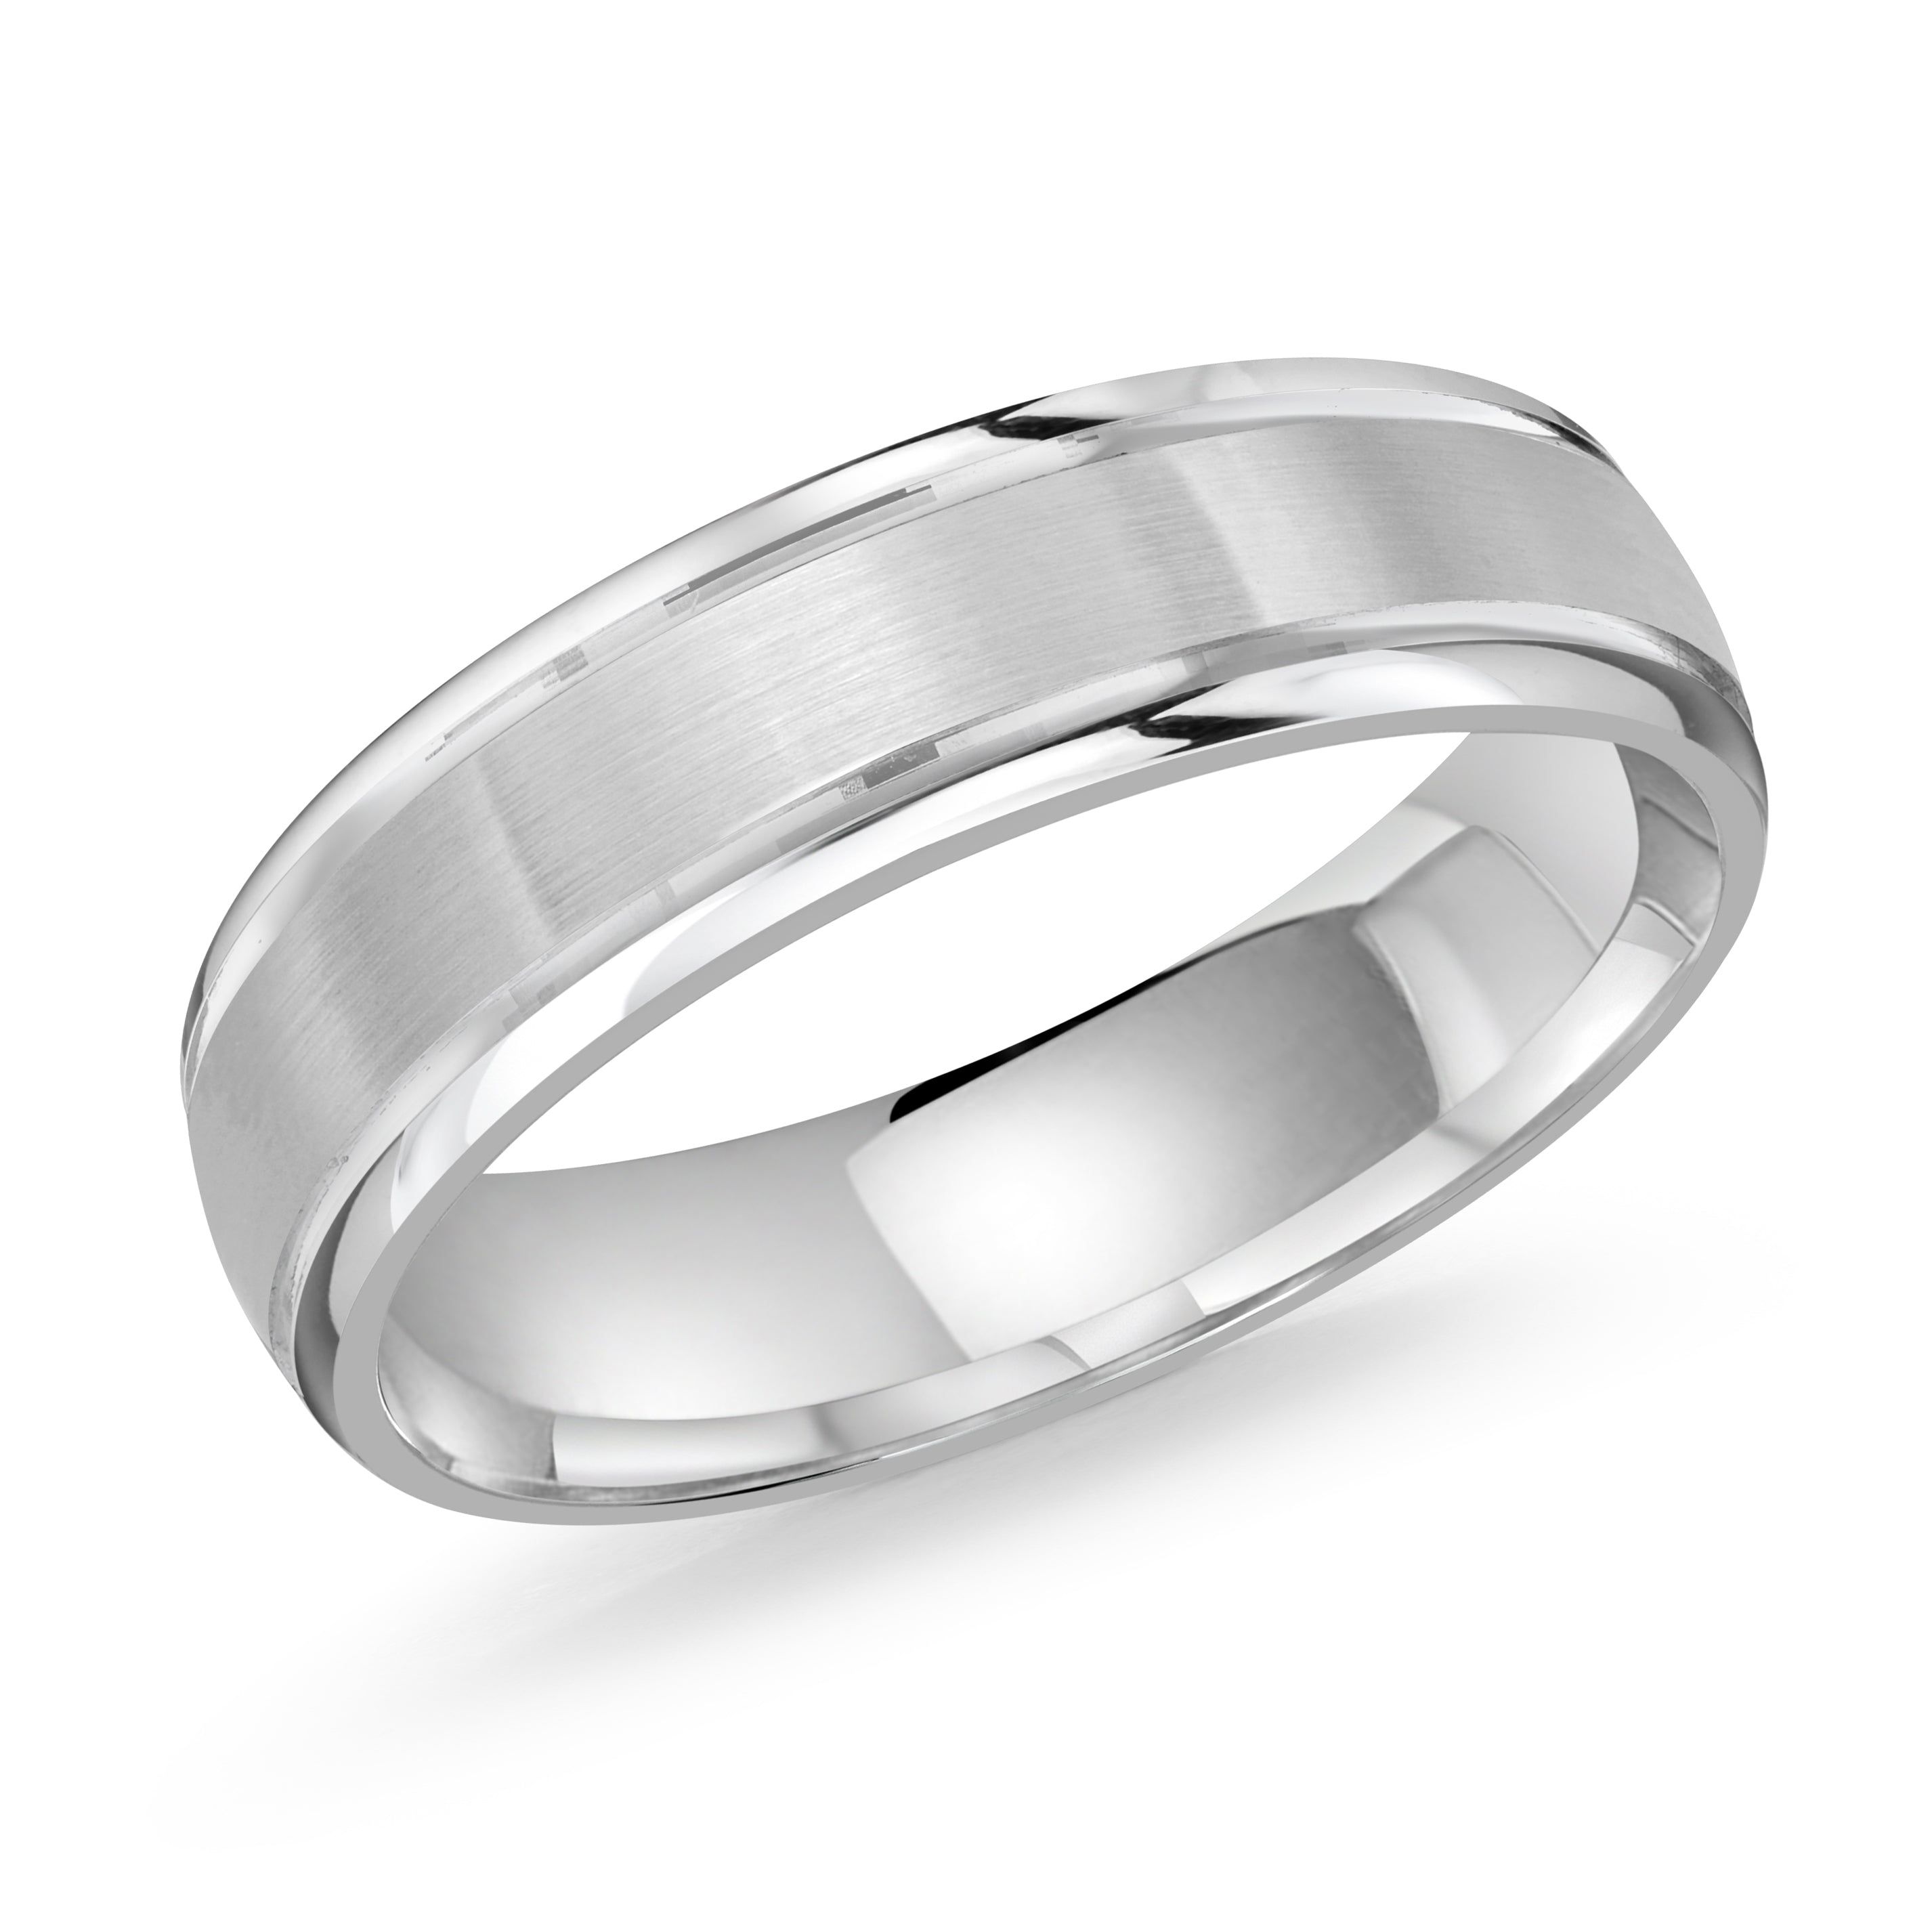 Men's Satin-finish Polished Edge Wedding Ring